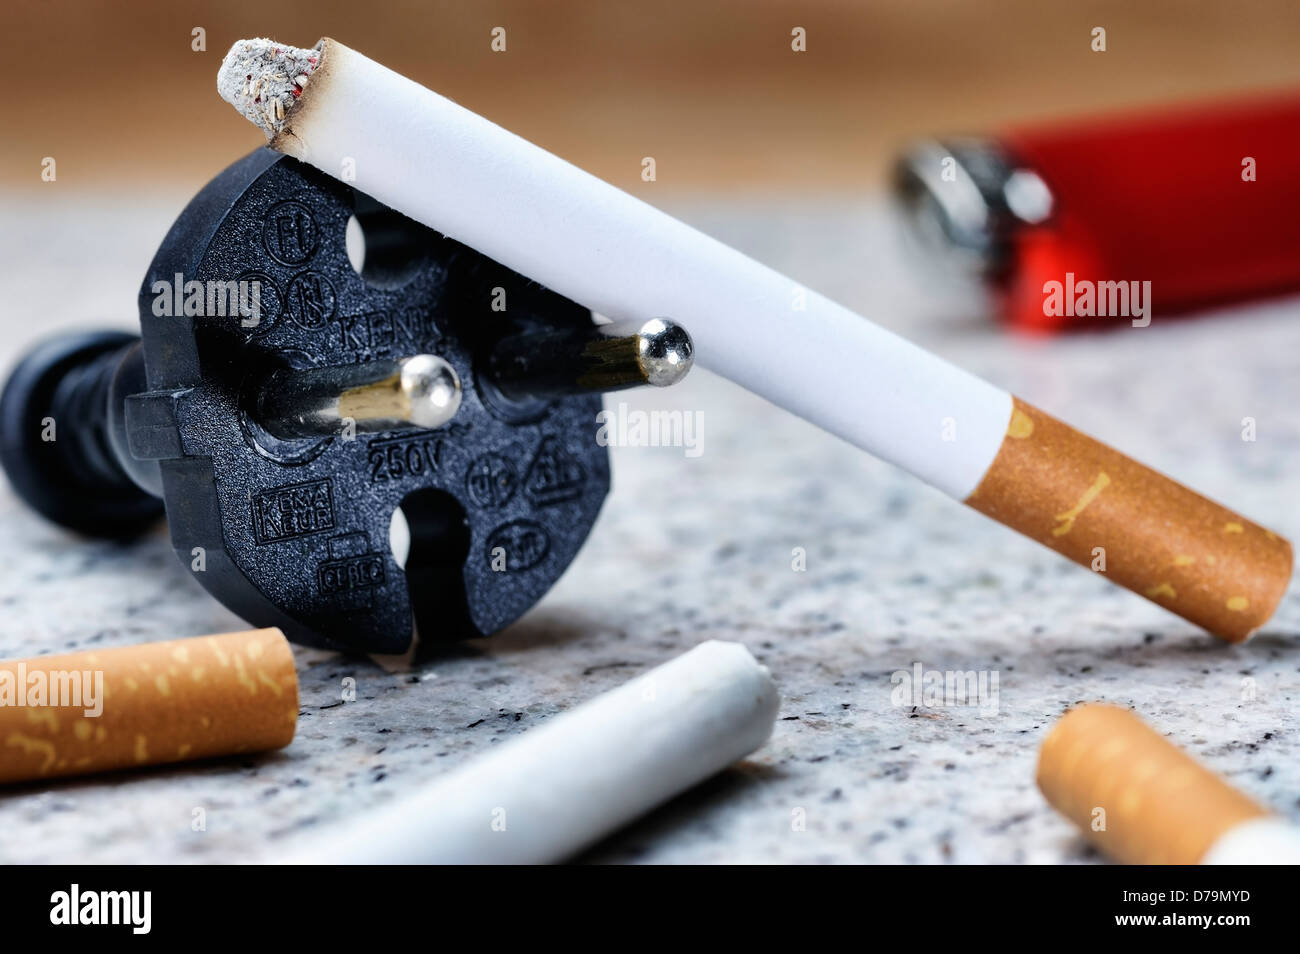 Cigarrillo eléctrico, foto , Elektrische Zigarette simbólico, Symbolfoto Foto de stock